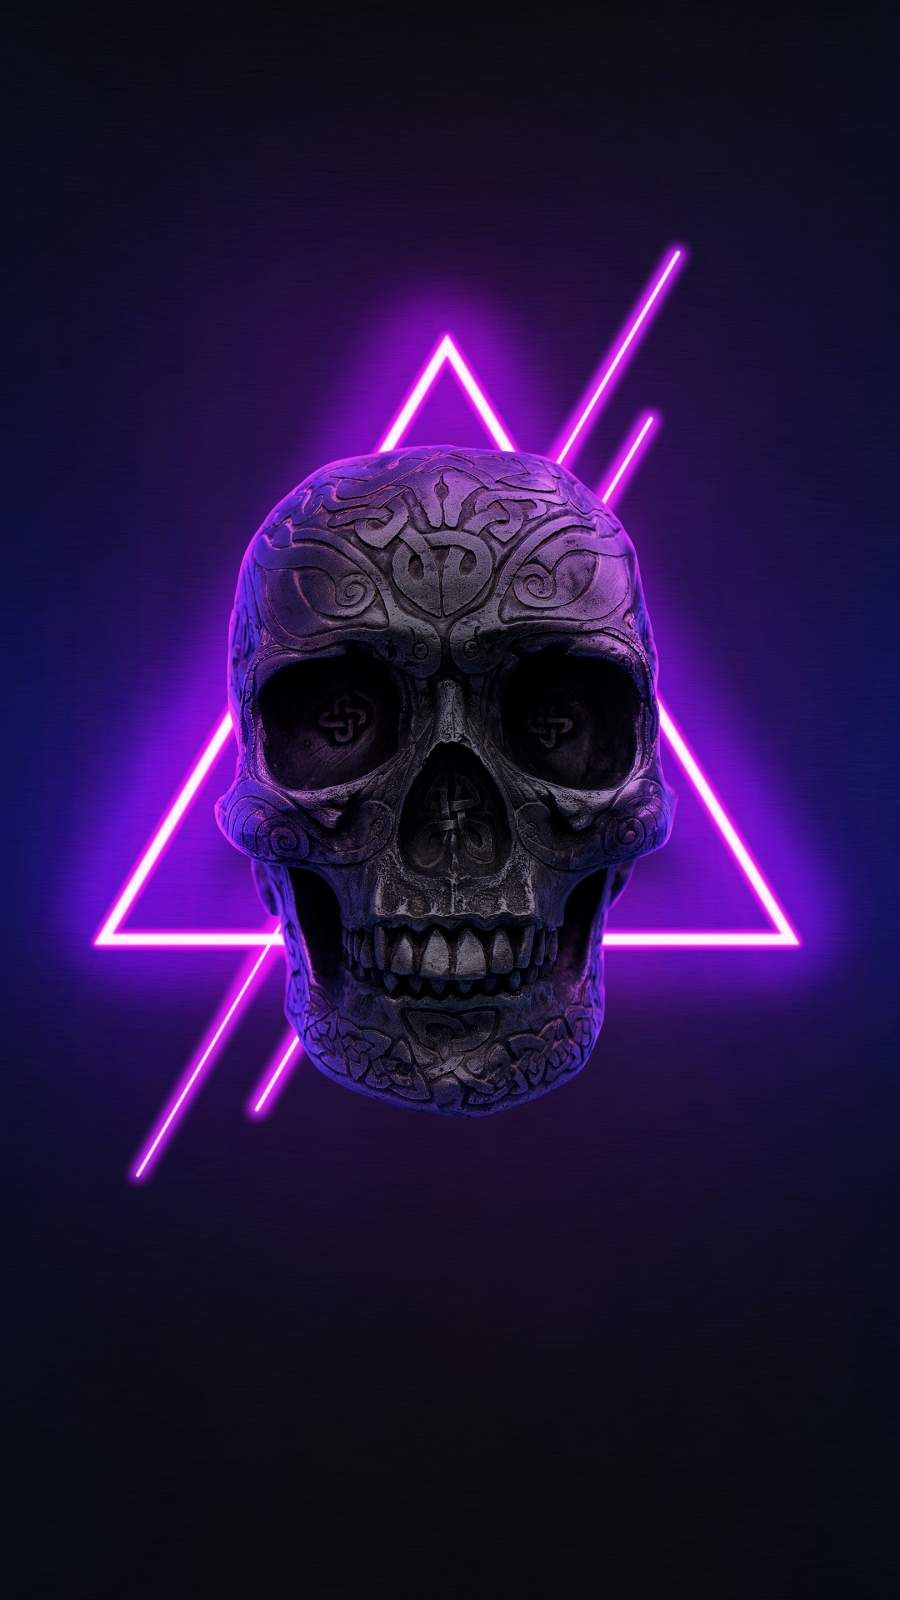 Free Download Neon Skull Iphone Wallpaper In 2020 Skull Wallpaper